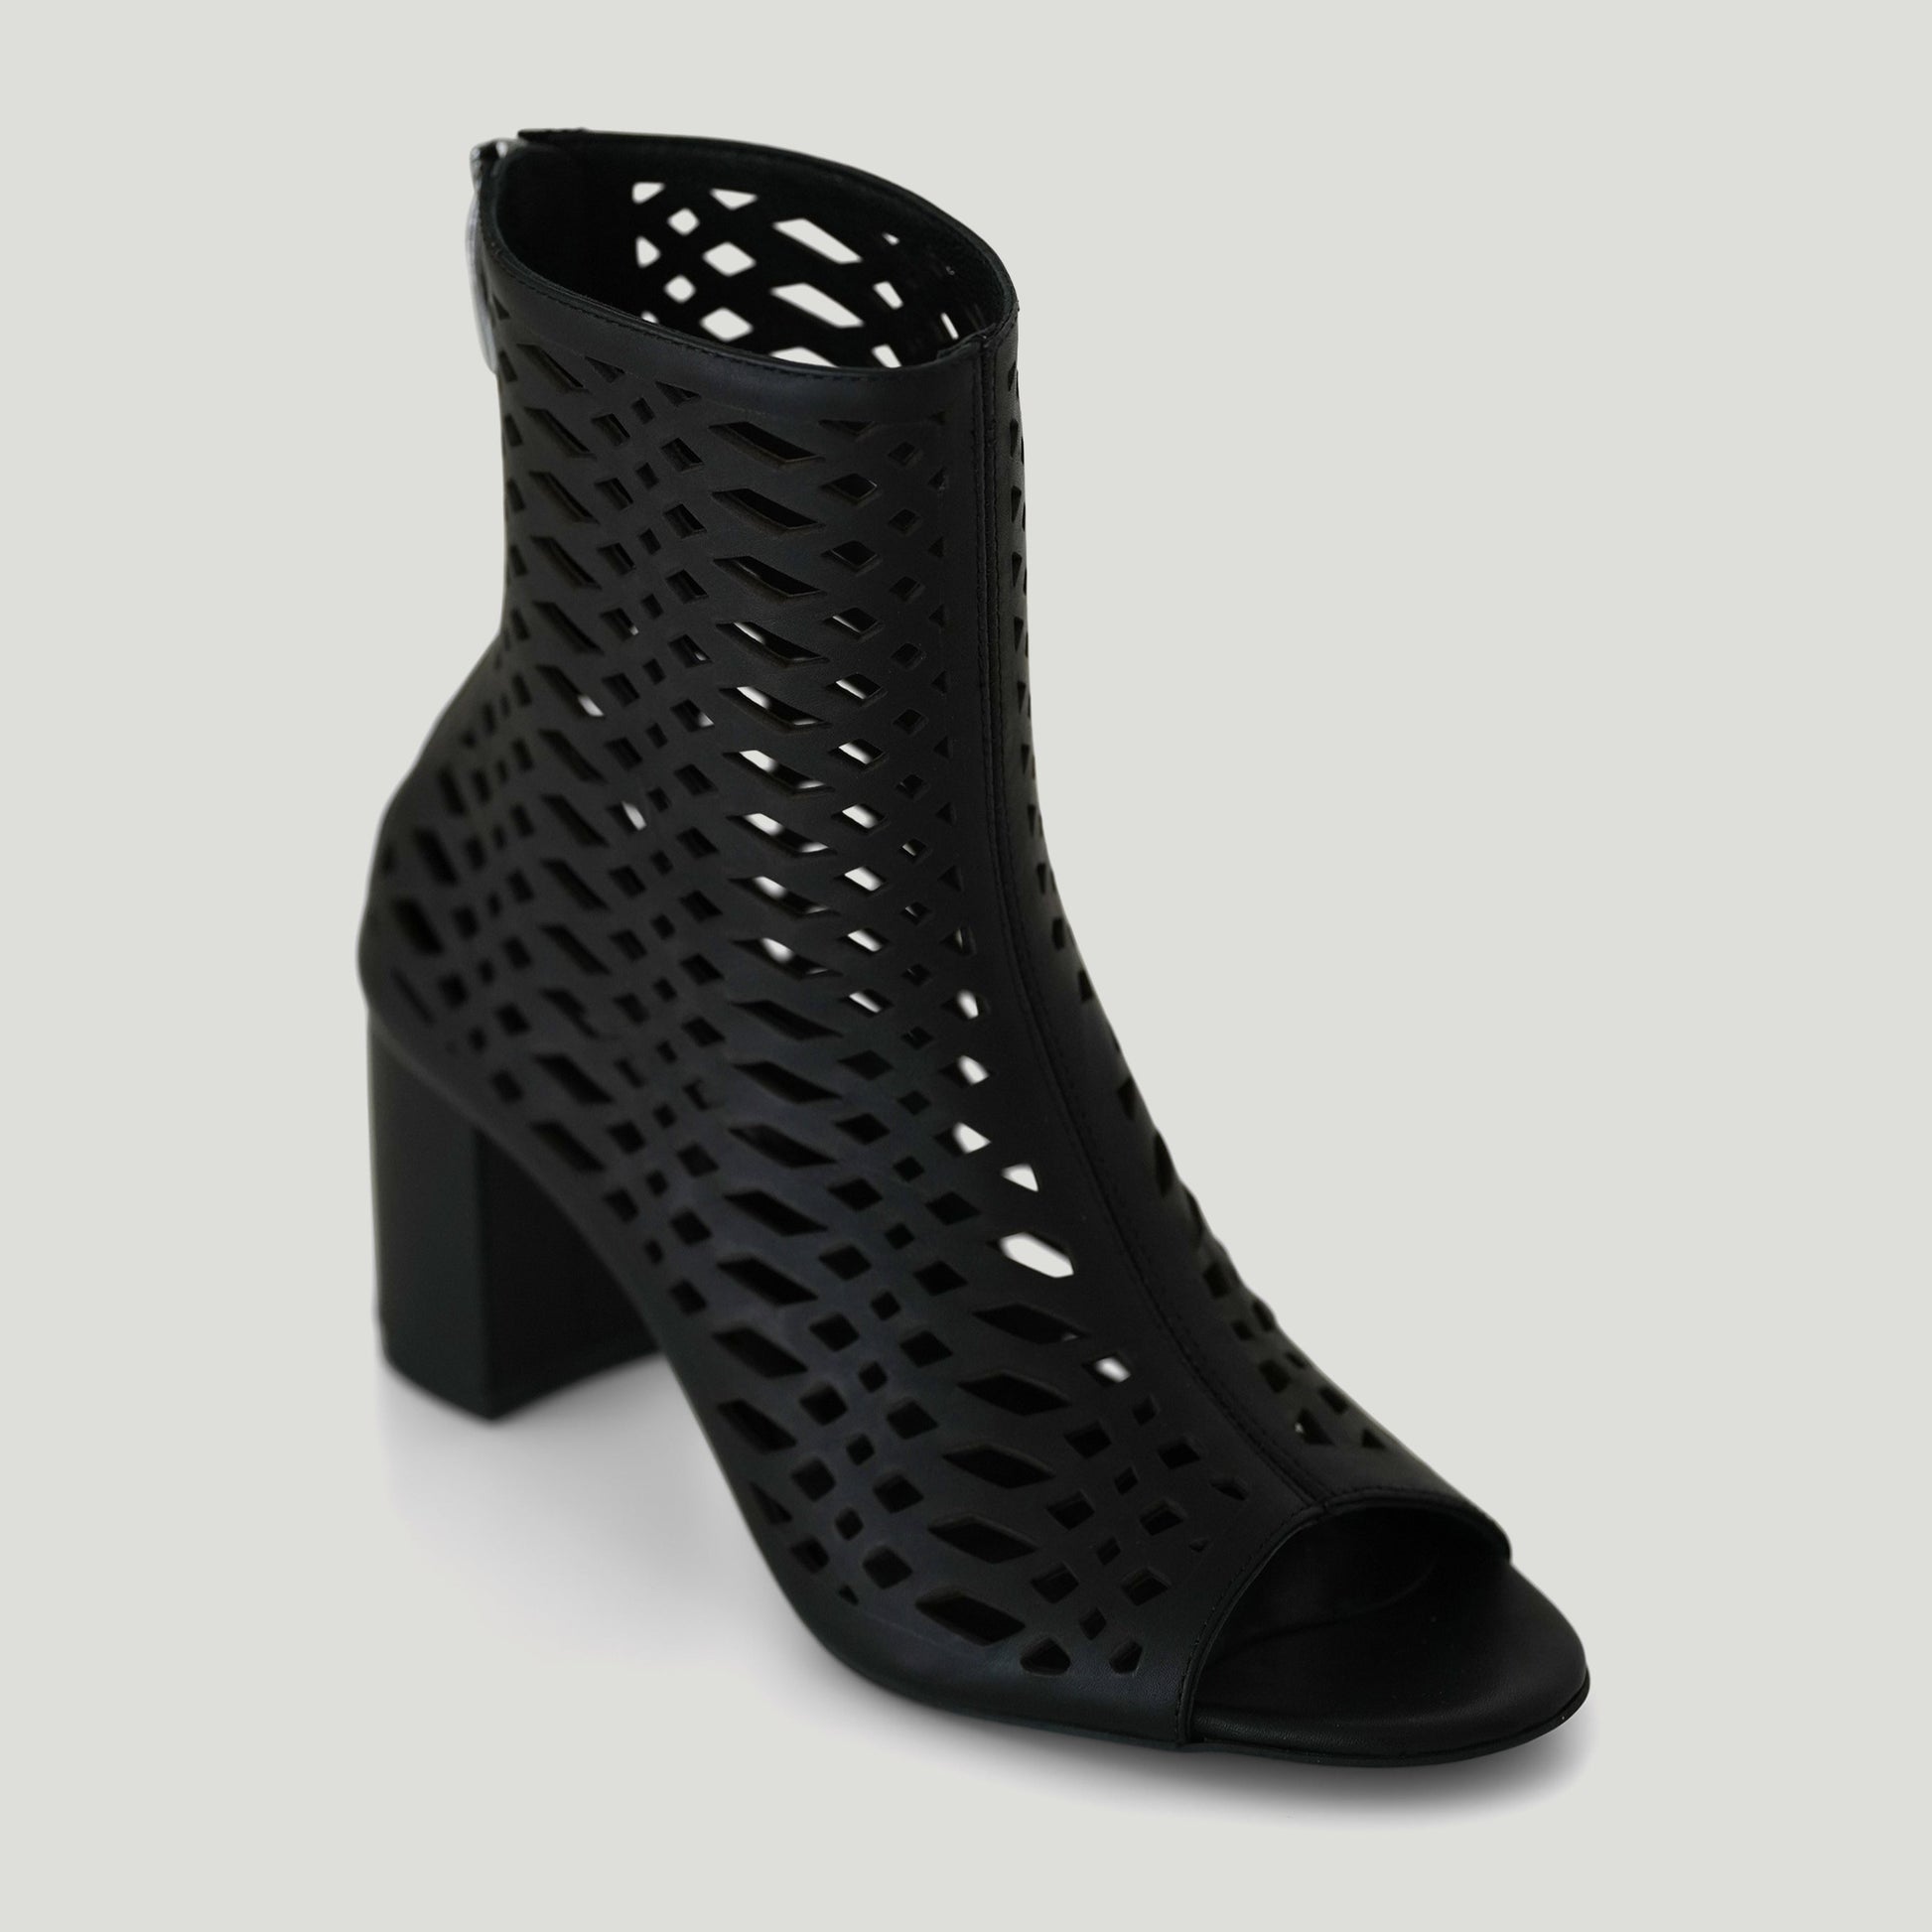 Kayan black heel- Heels - kuwait - Ksa- shoes